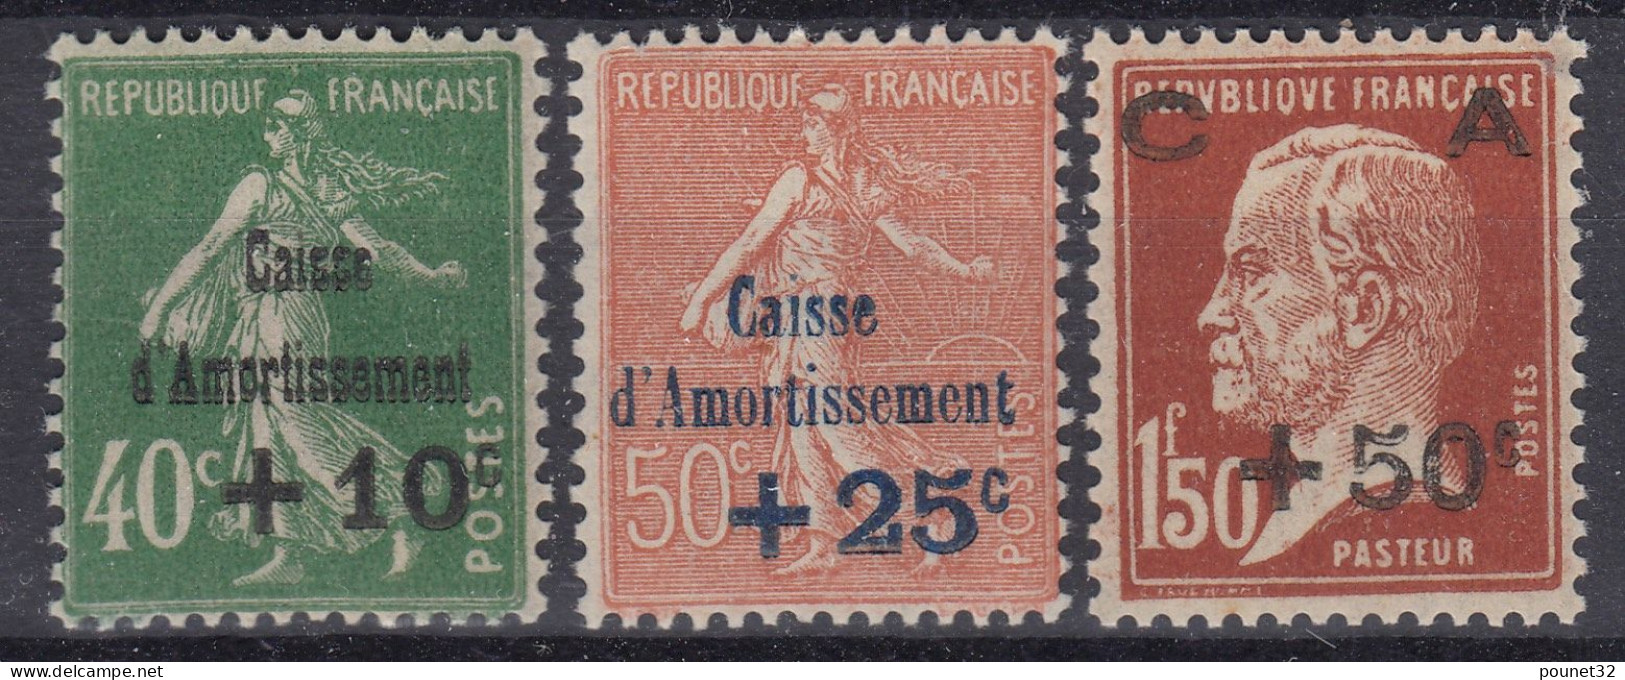 FRANCE CAISSE D'AMORTISSEMENT SERIE N° 253/255 NEUFS * GOMME TRACE DE CHARNIERE - 1927-31 Caisse D'Amortissement